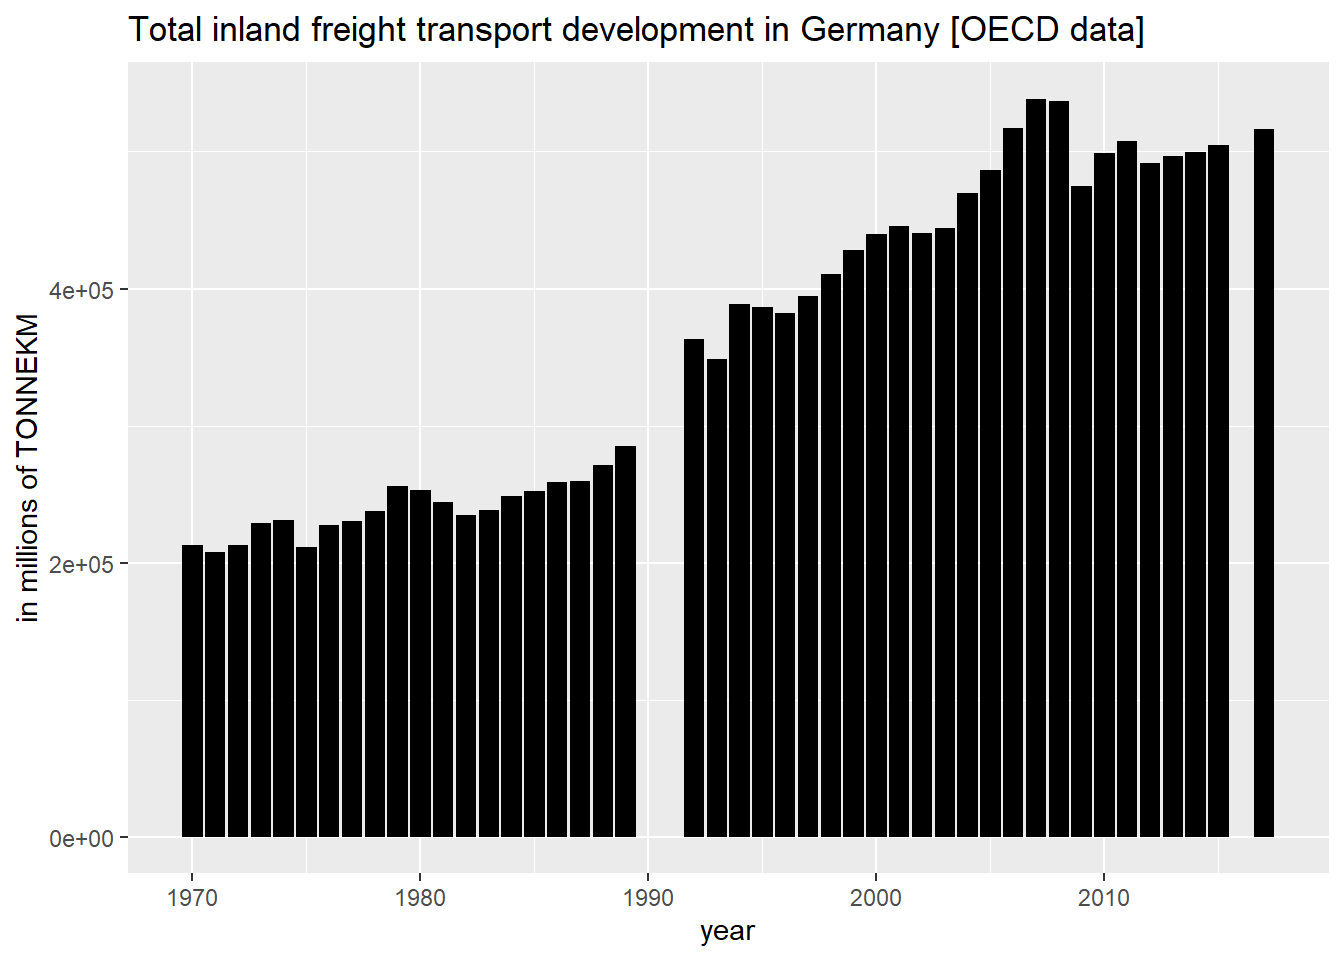 oecd freight transport data